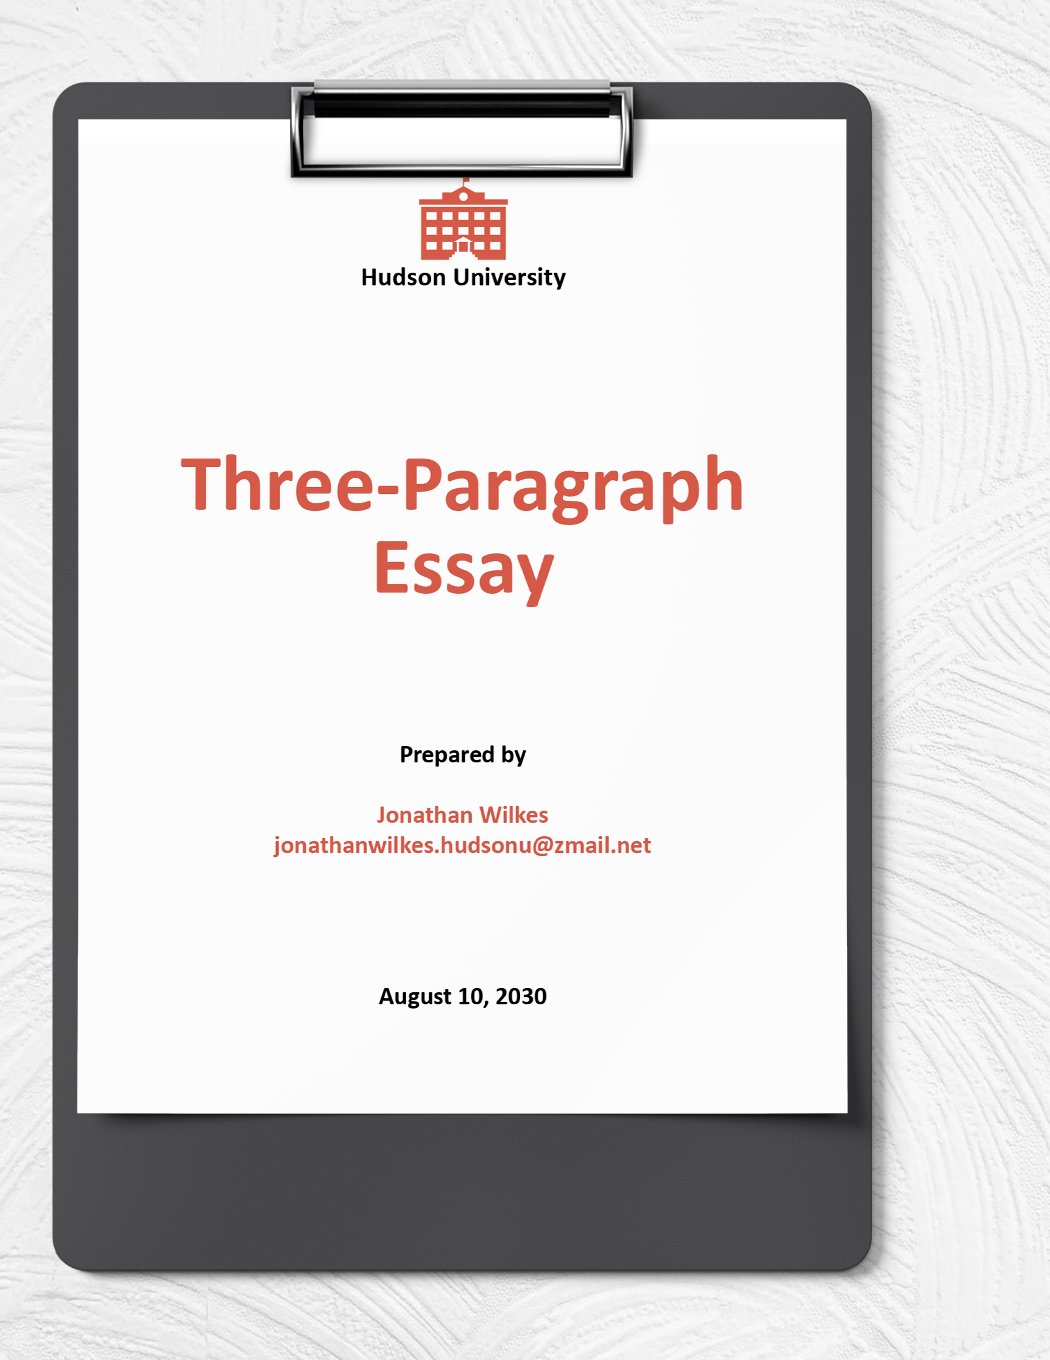 ThreeParagraph Essay Template Download in Word, Google Docs